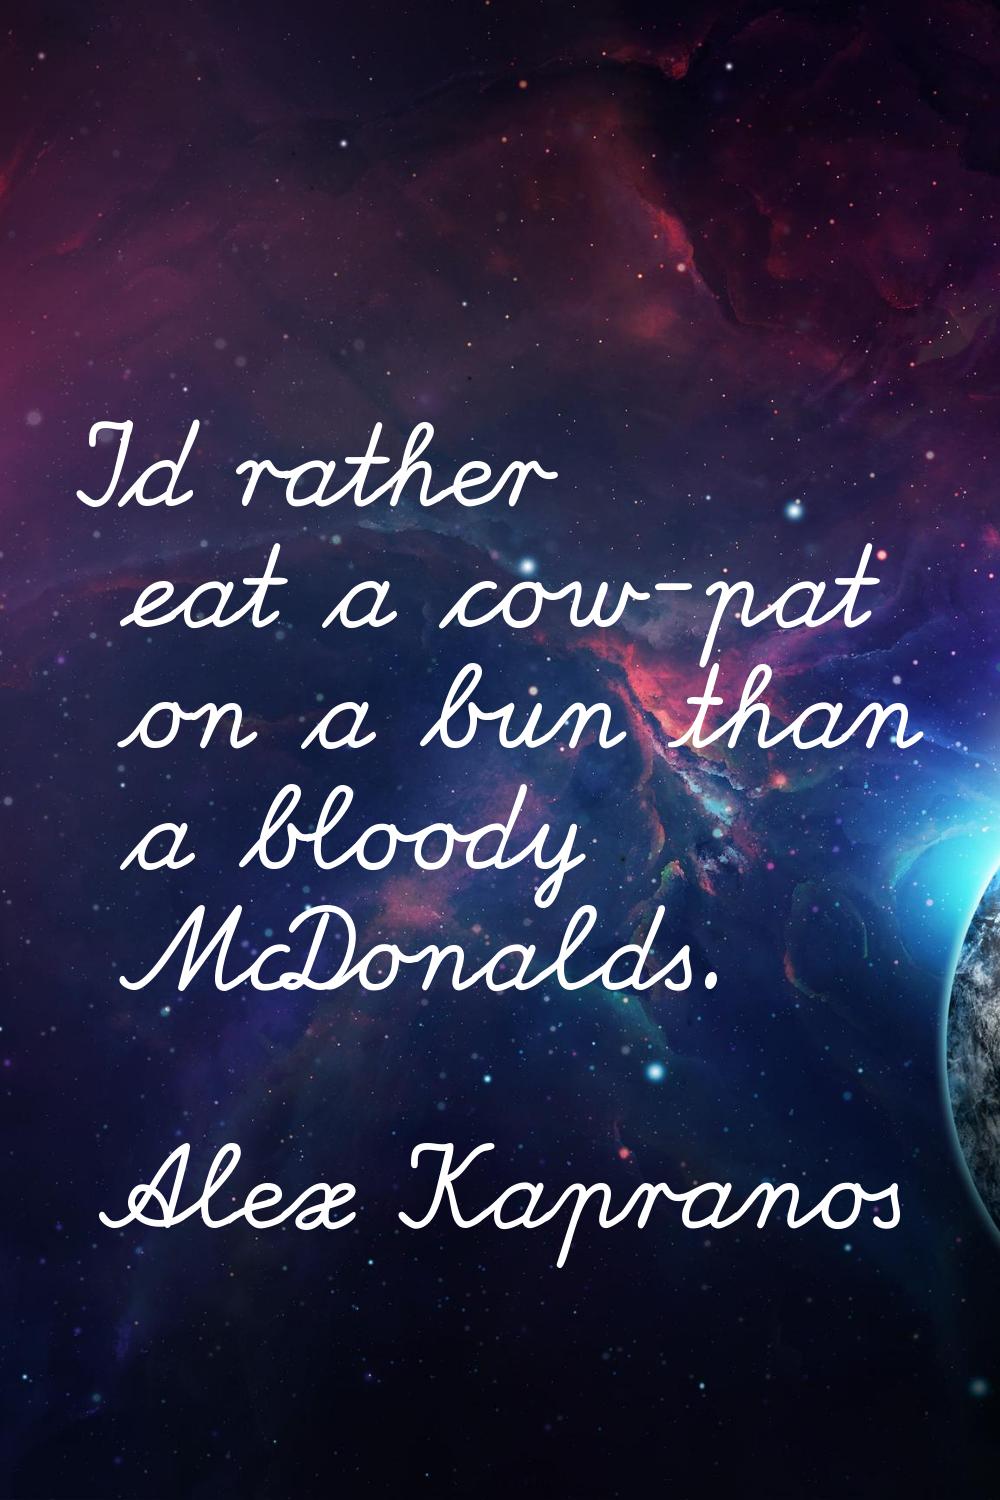 I'd rather eat a cow-pat on a bun than a bloody McDonalds.